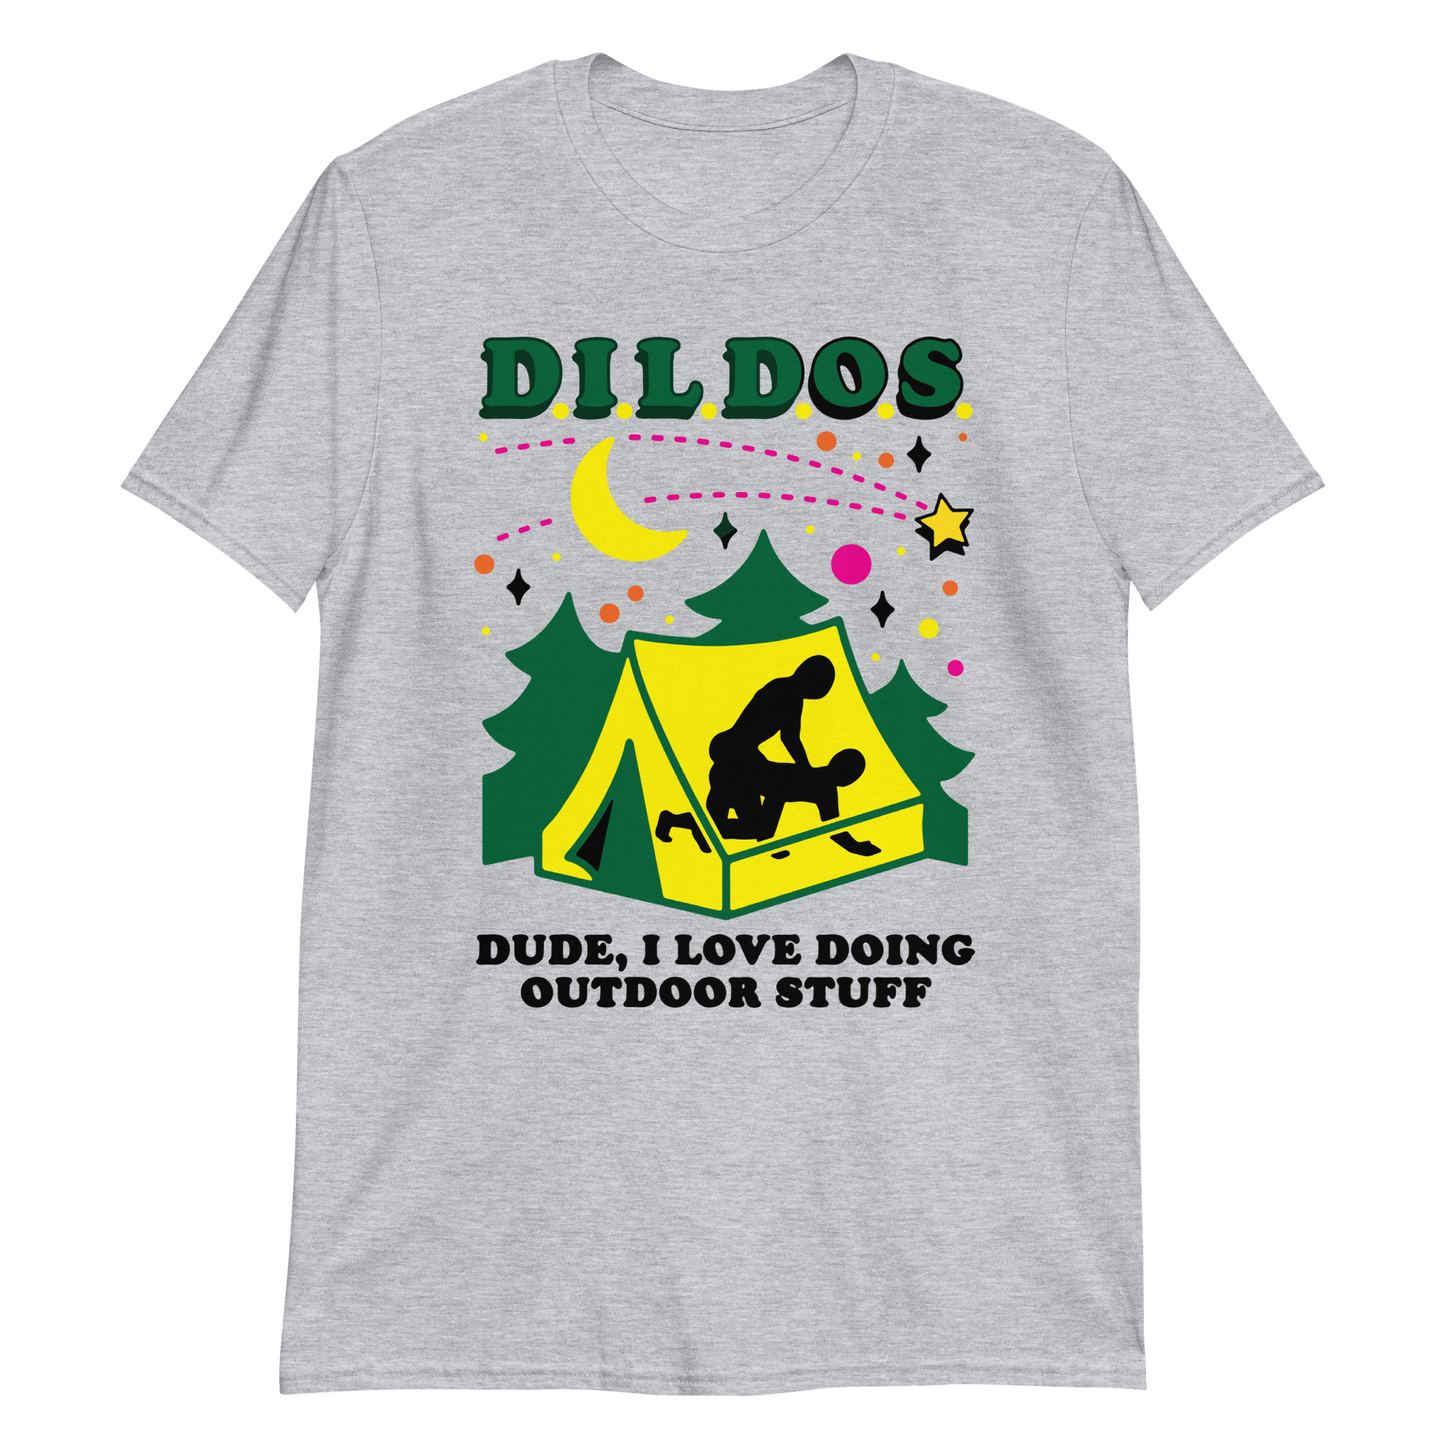 DILDOS (Dude I Love Doing Outdoor Stuff)